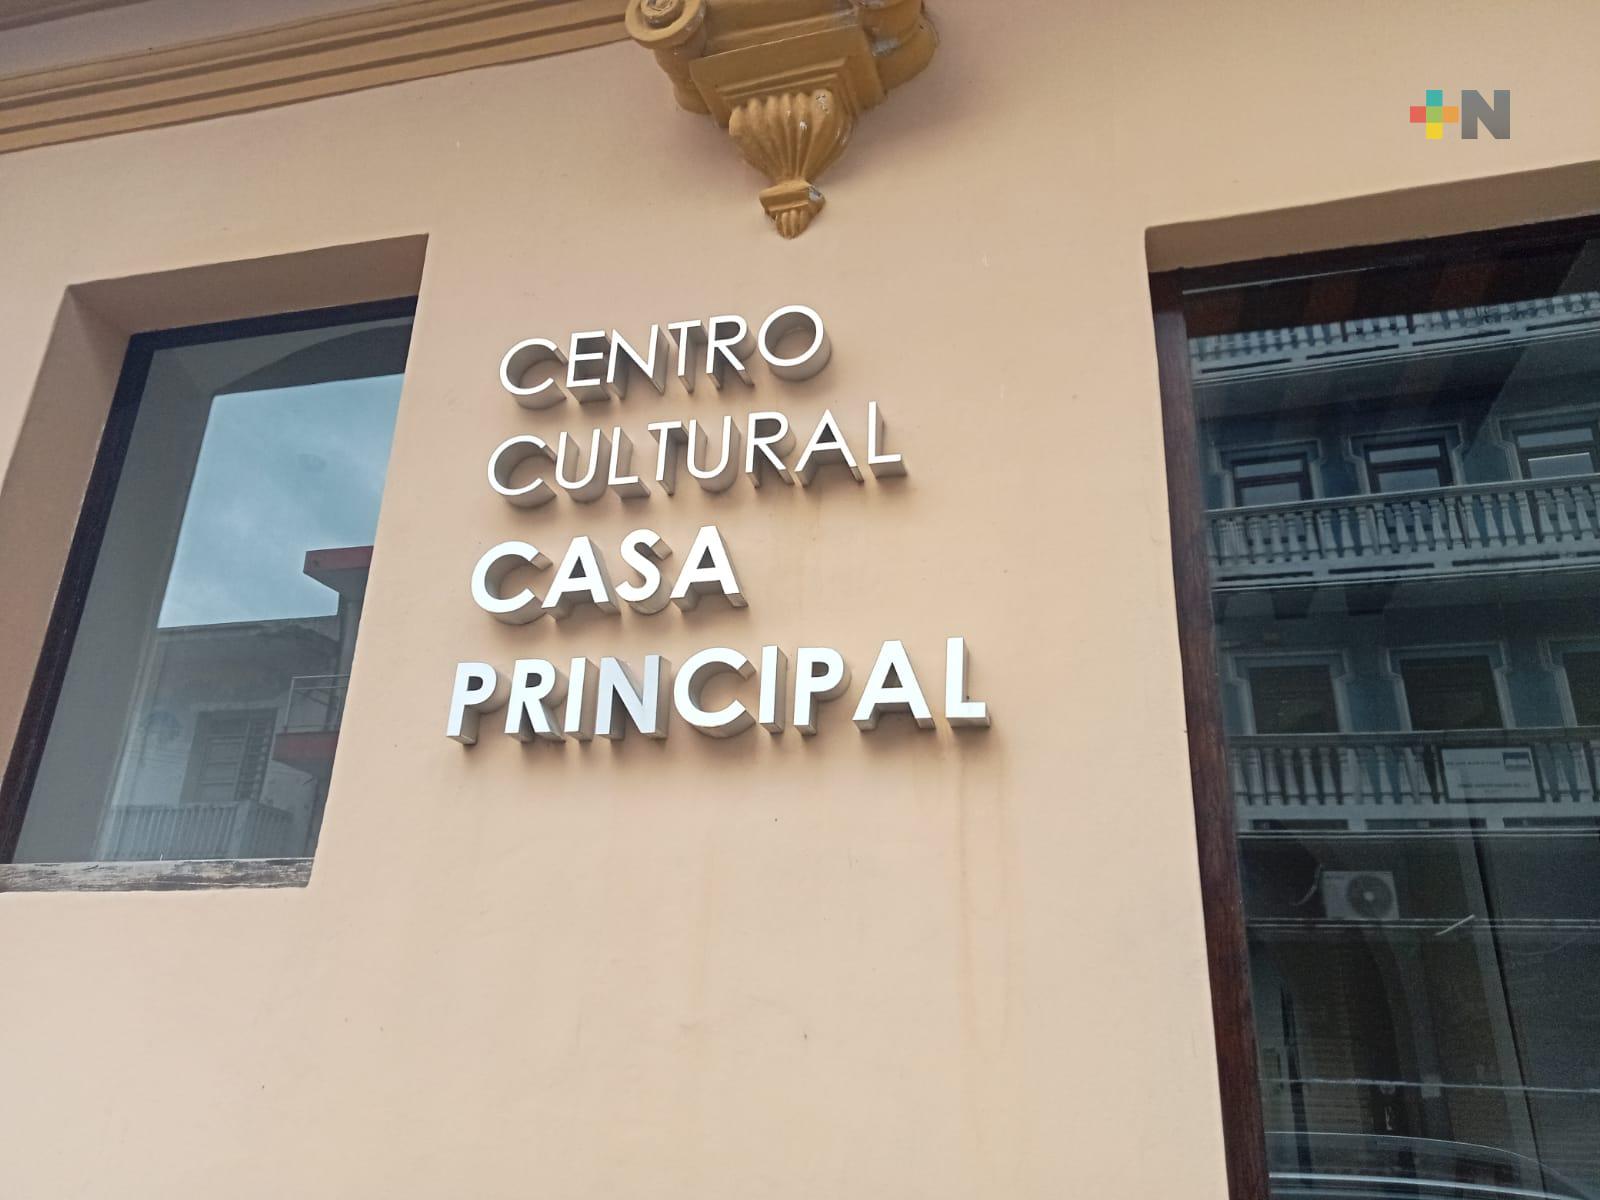 Llega la sexta Bienal de Arte de Veracruz al centro cultural Casa Principal